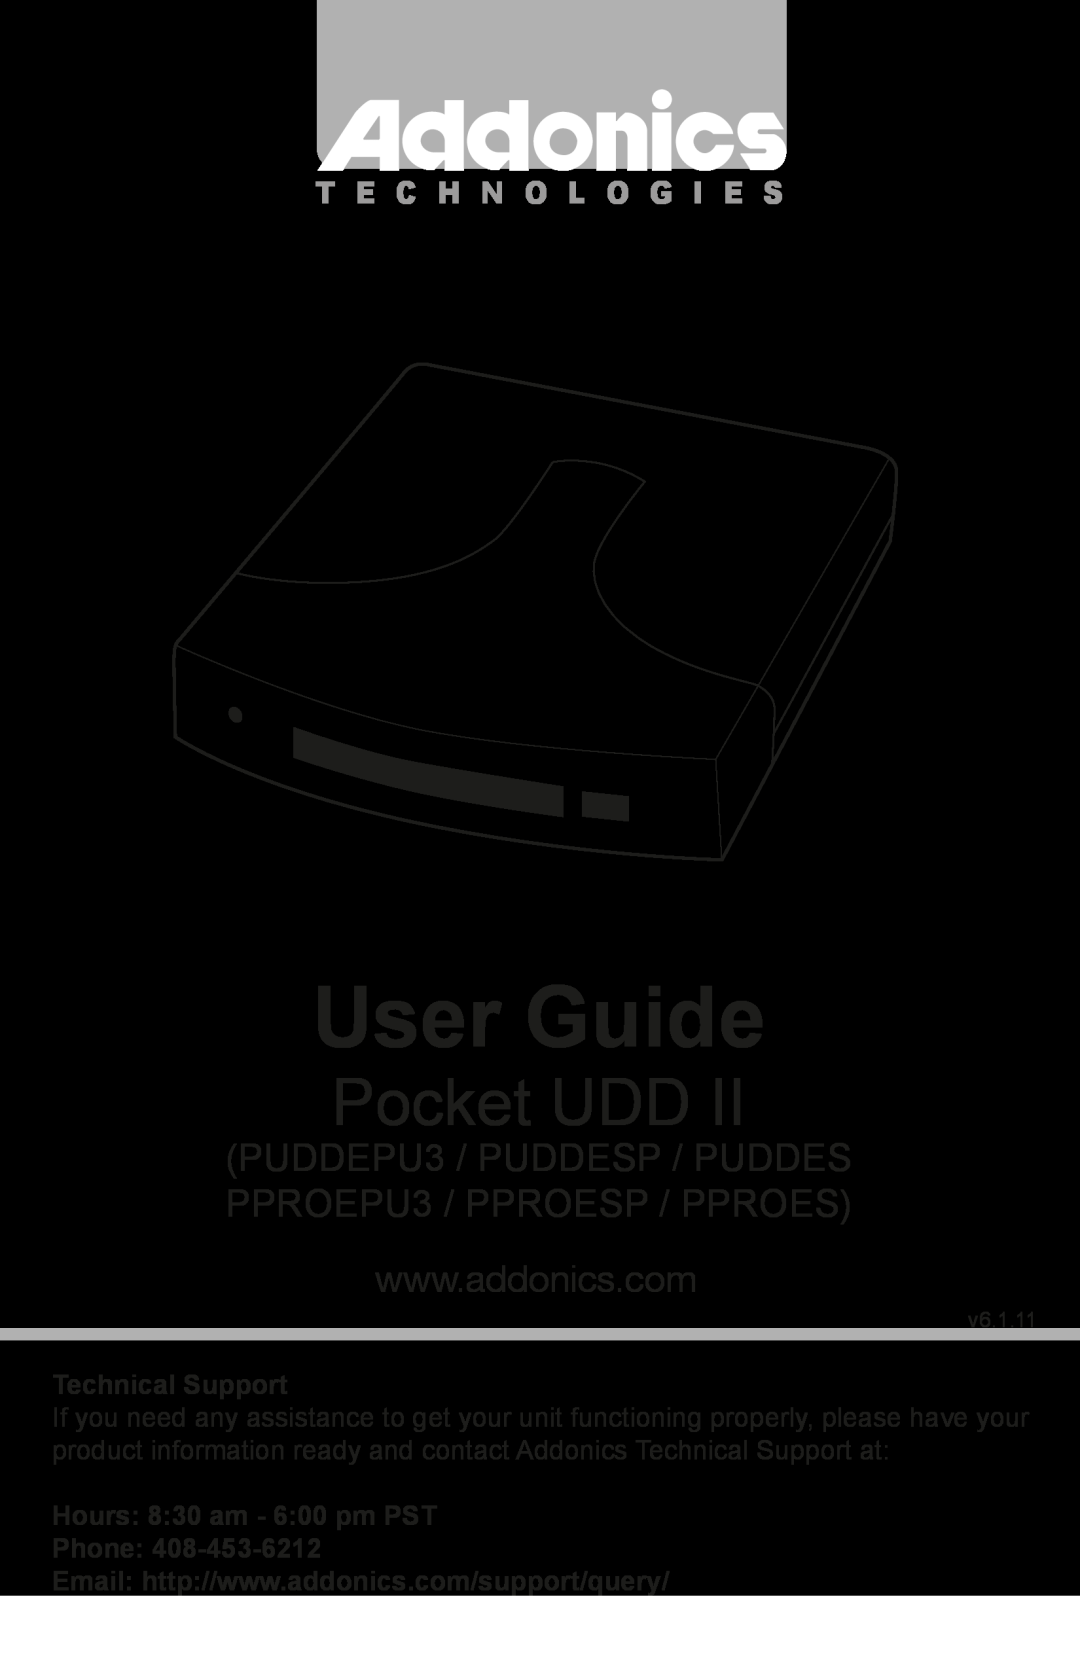 Addonics Technologies manual User Guide, Pocket UDD, PUDDEPU3 / PUDDESP / PUDDES PPROEPU3 / PPROESP / PPROES 